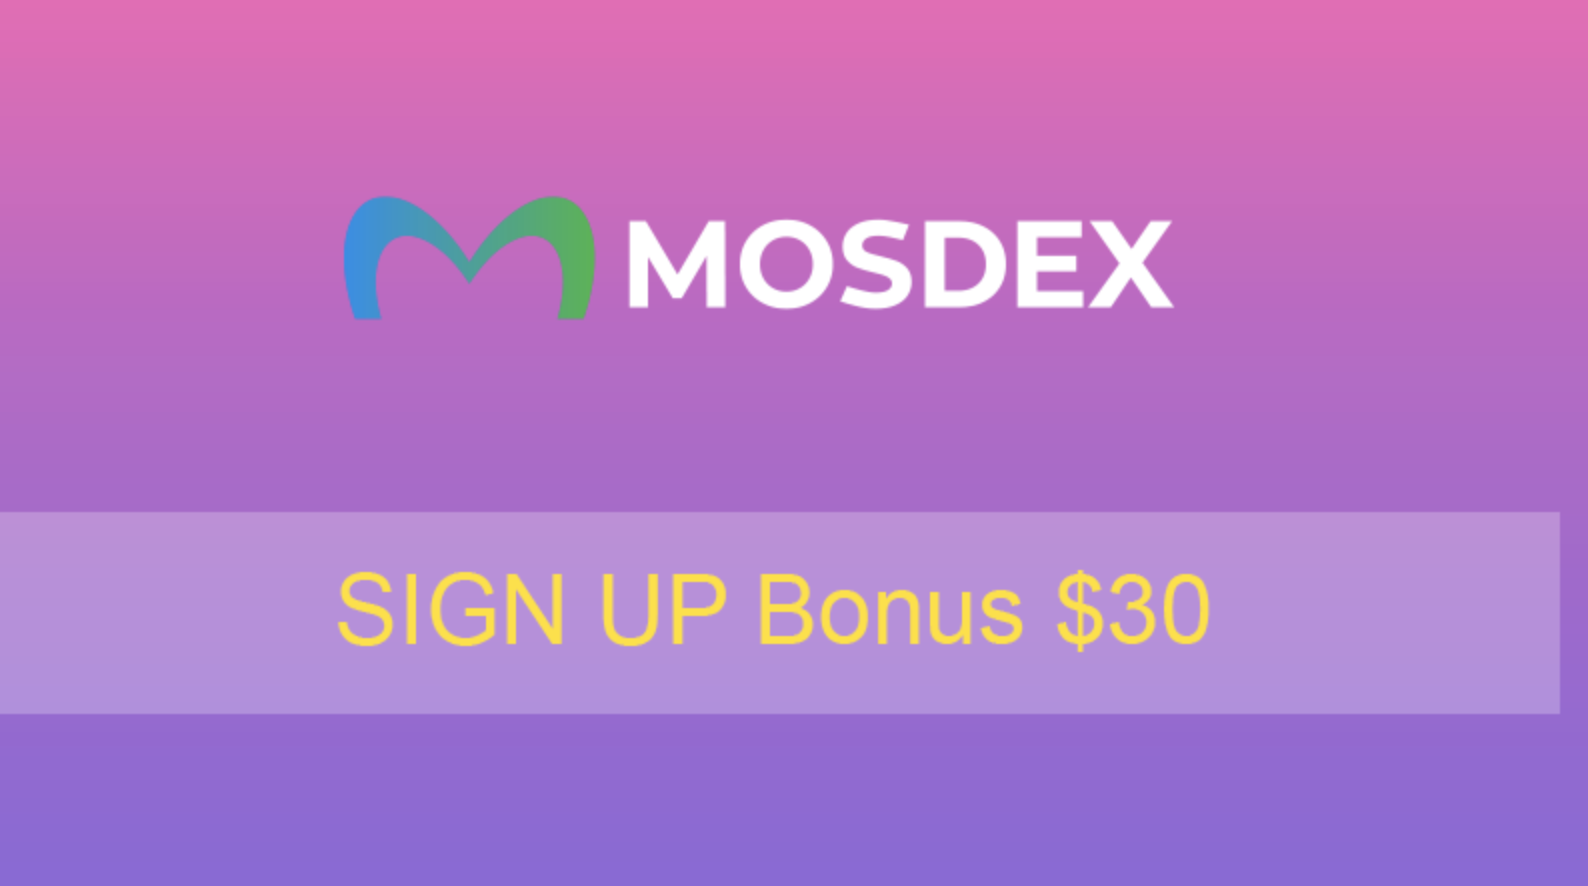 Mosdex is Now Offering 30 USDT Through its Referral Program